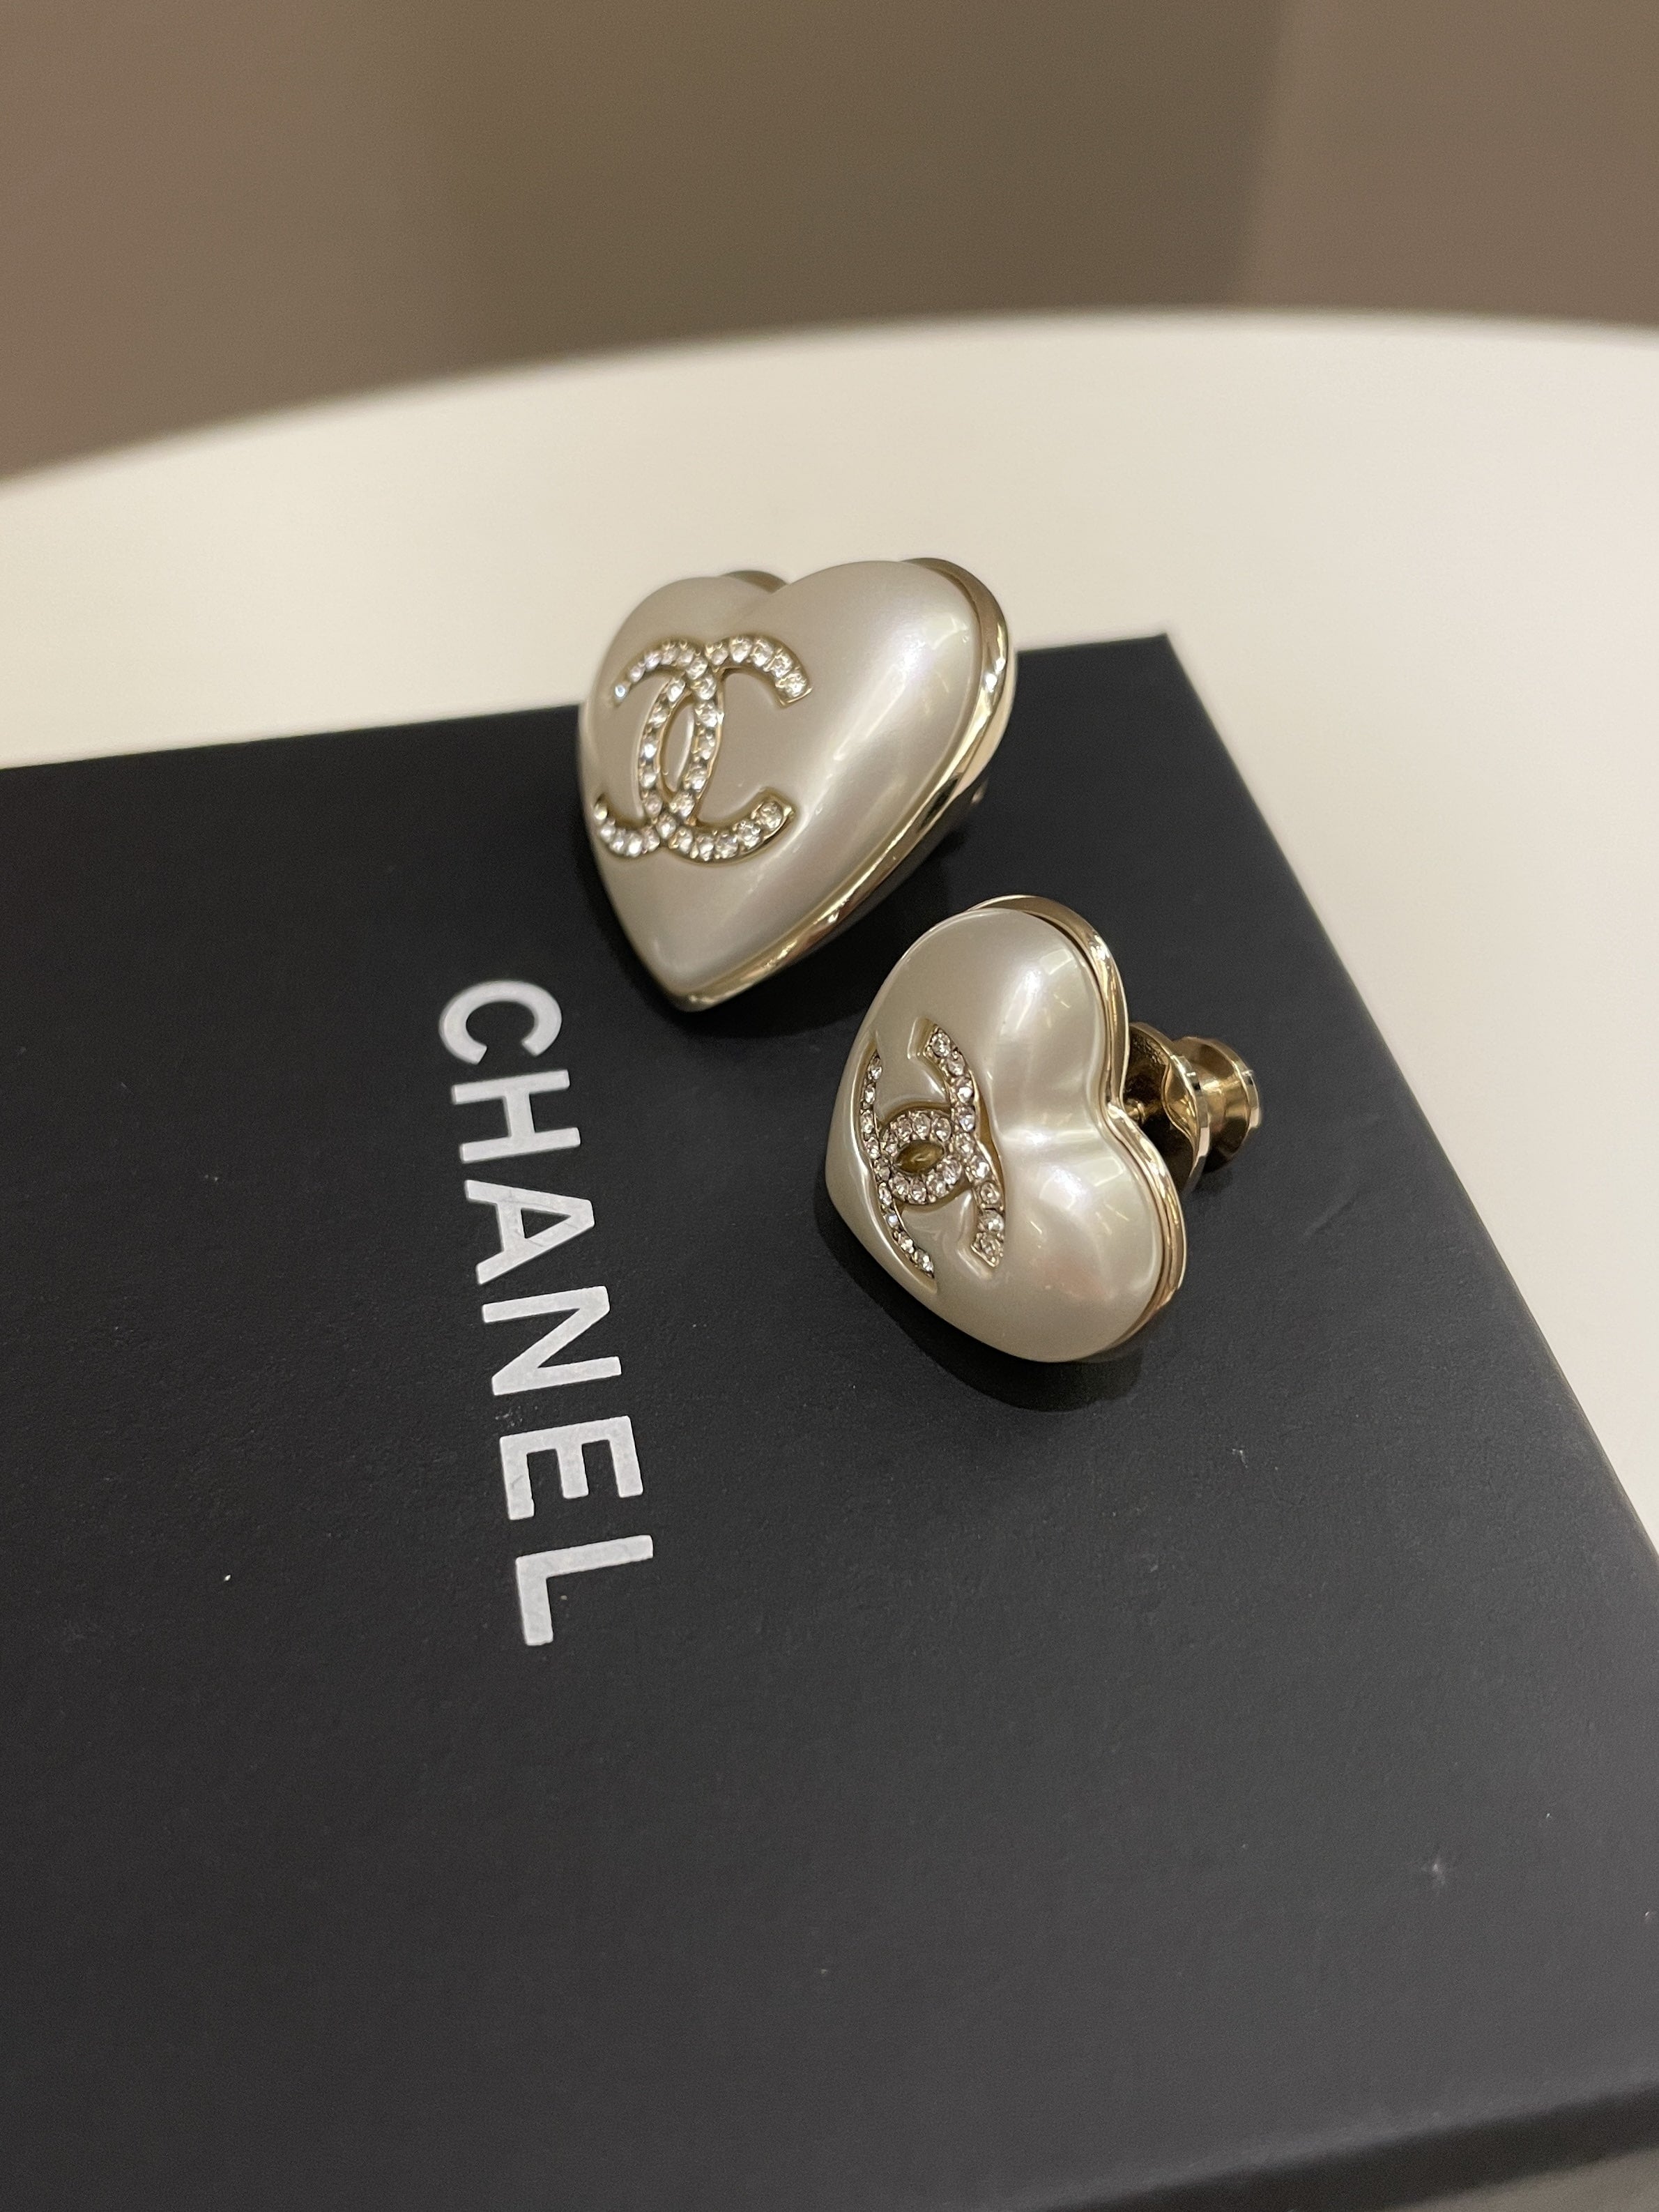 Chanel 21B Cc 2 Heart Pin Set
Ivory/ Rhinestones